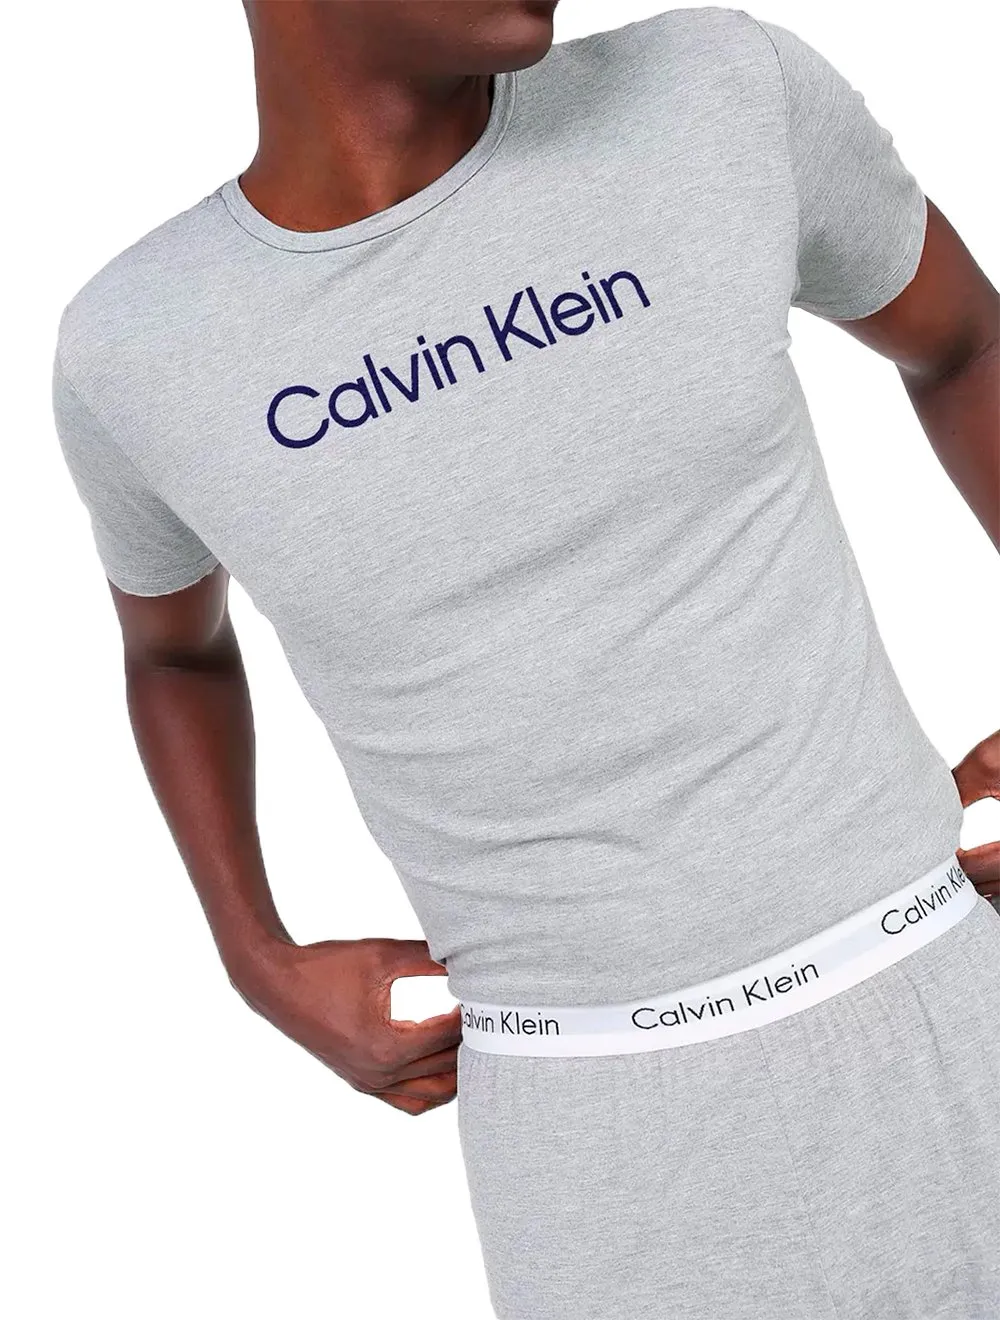 Pijama Calvin Klein Masculino Short Curto Viscolight Cinza Mescla